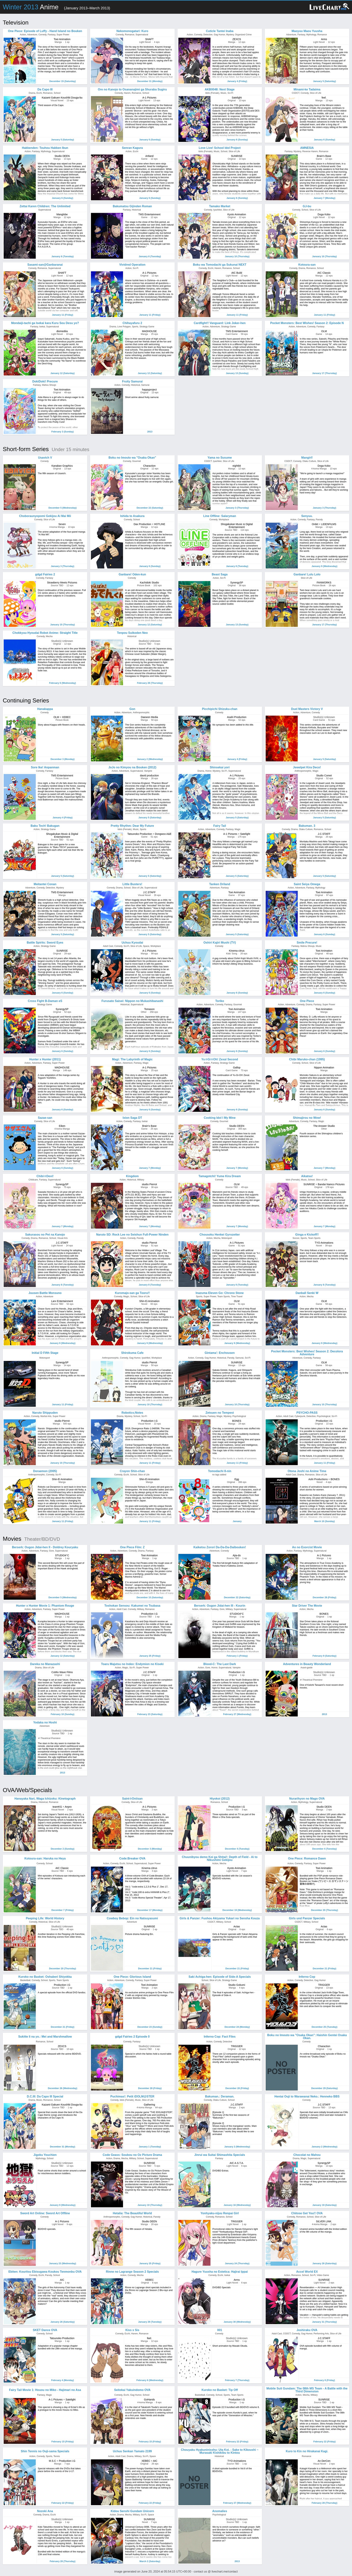 Anime Chart Summer 2013